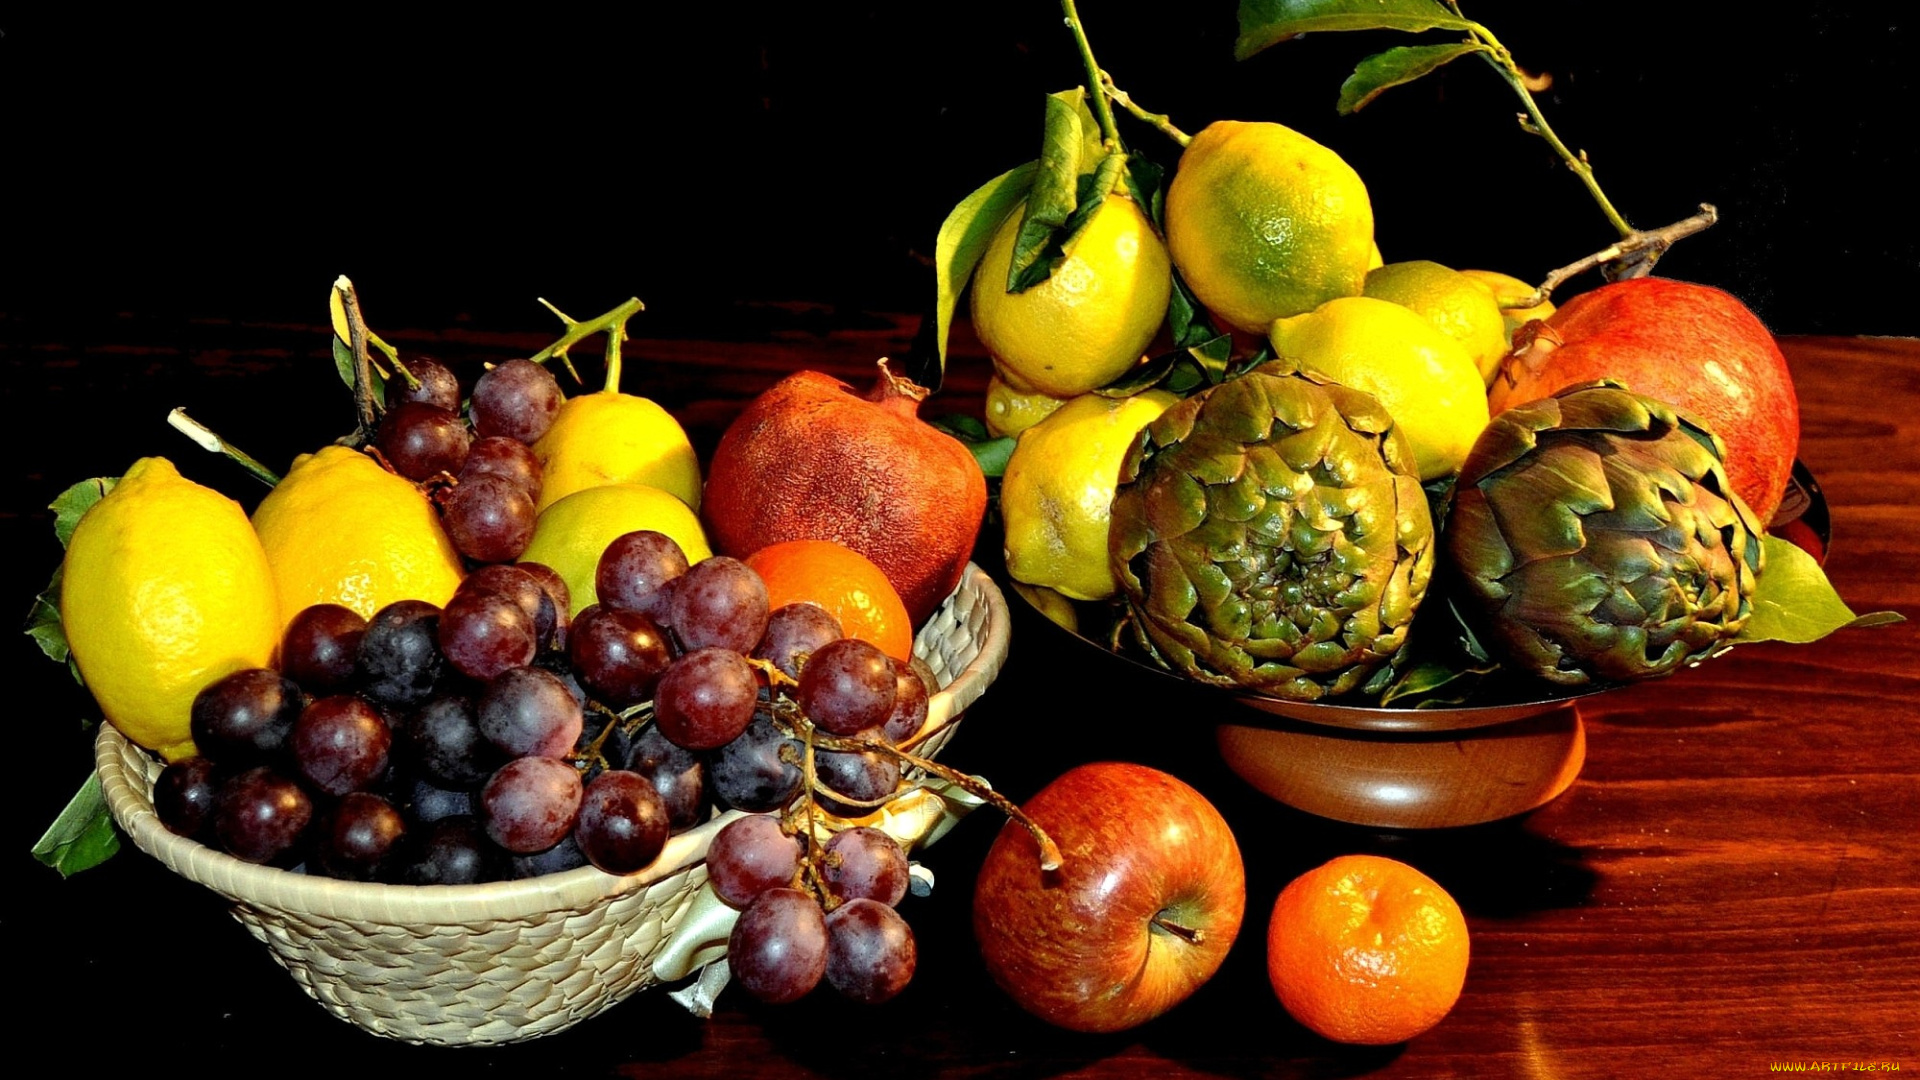 еда, фрукты, овощи, вместе, мандарин, артишоки, яблоки, лимоны, гранат, виноград